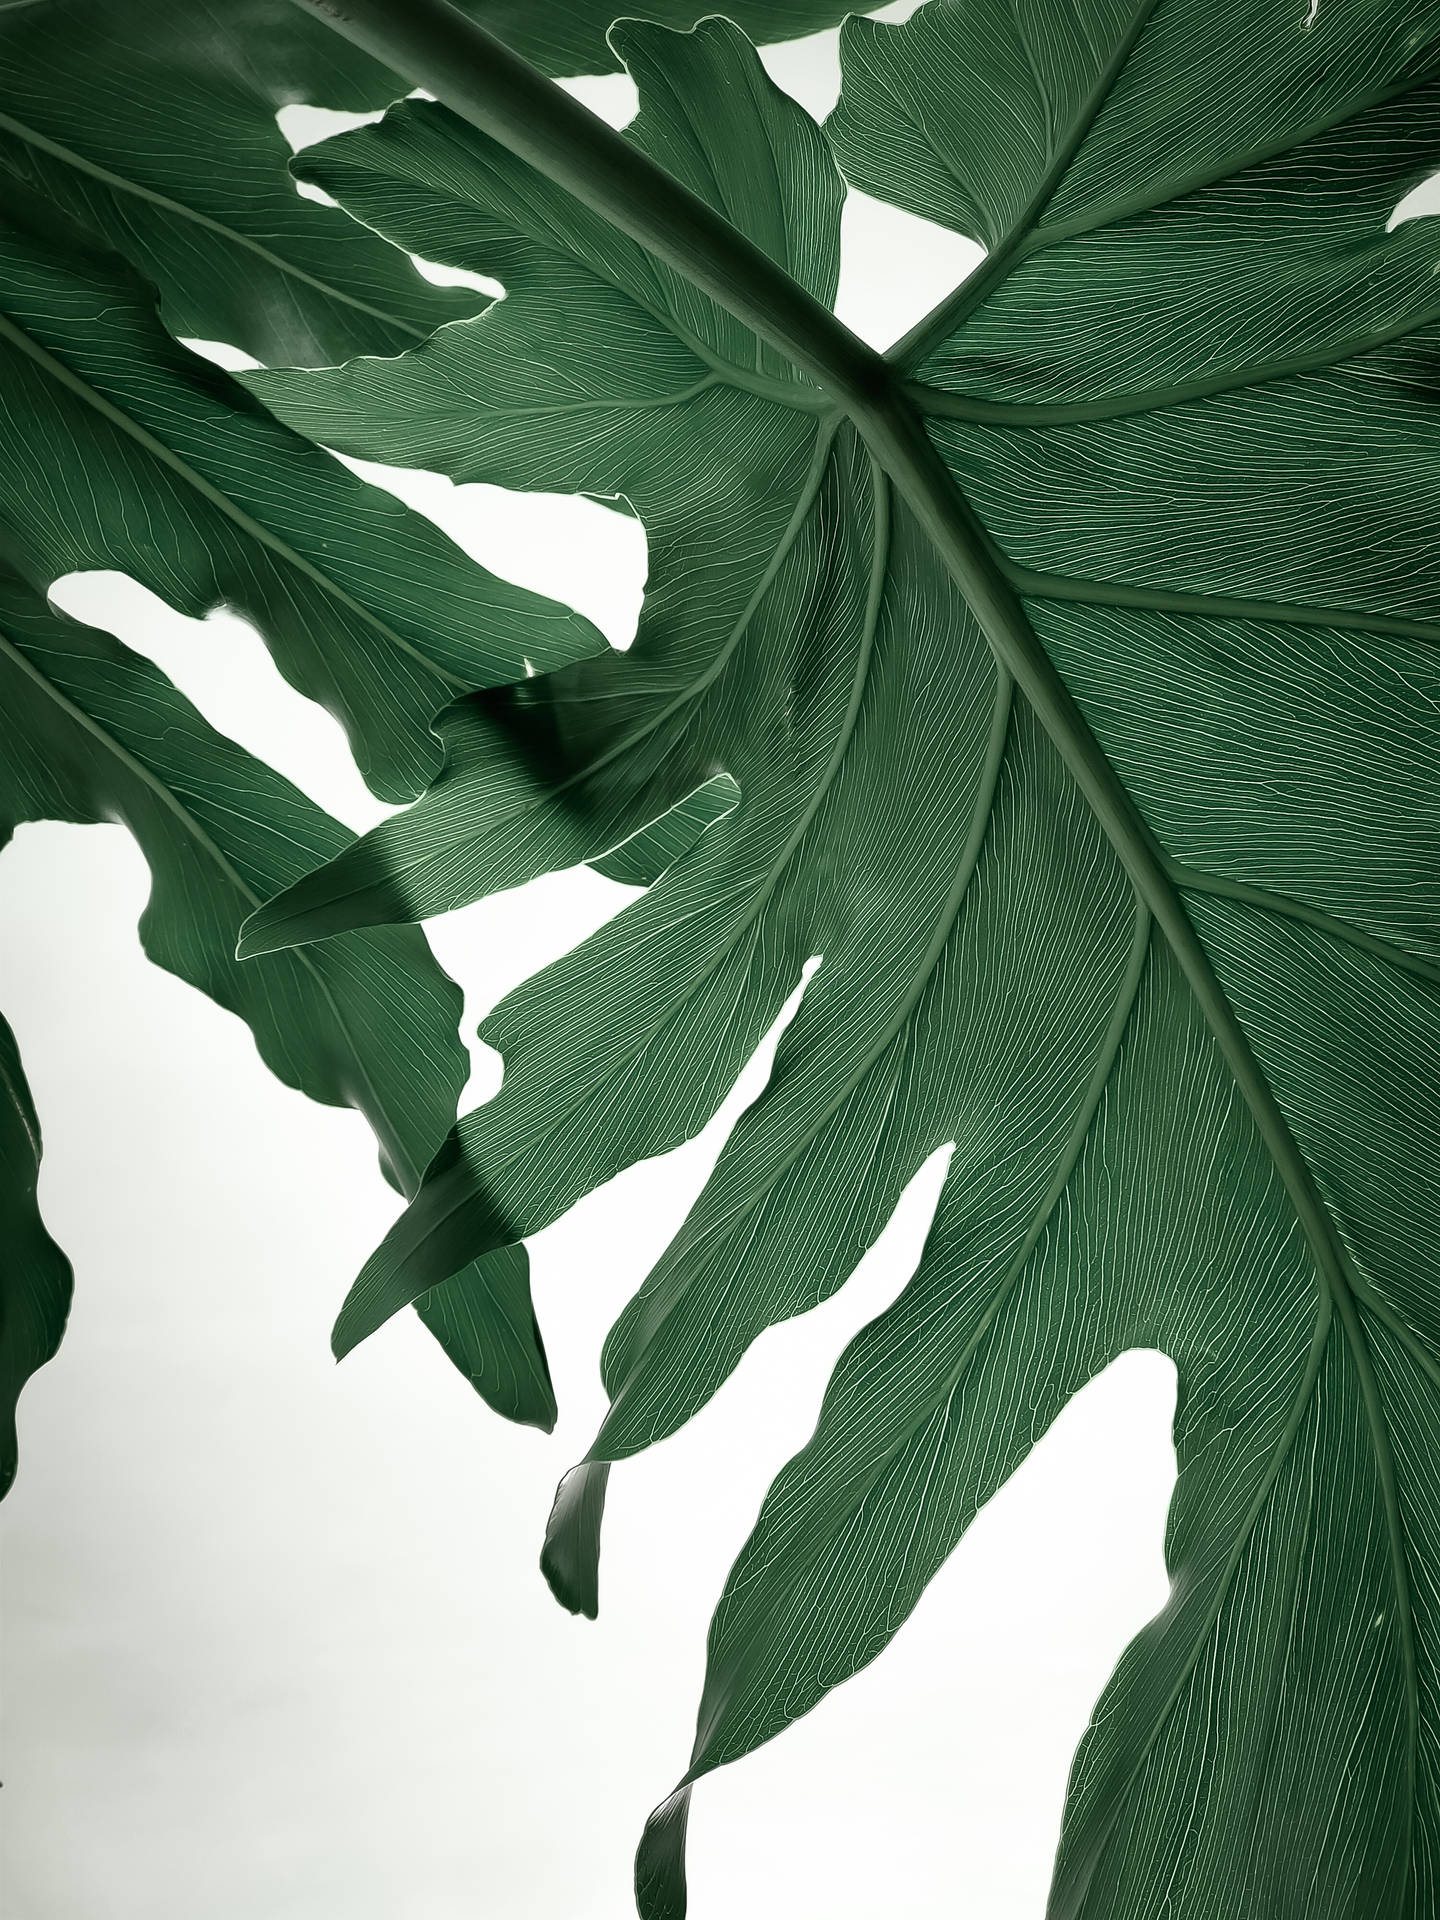 Tekstureret schweizisk ost planter blade over en salviegrøn baggrund. Wallpaper